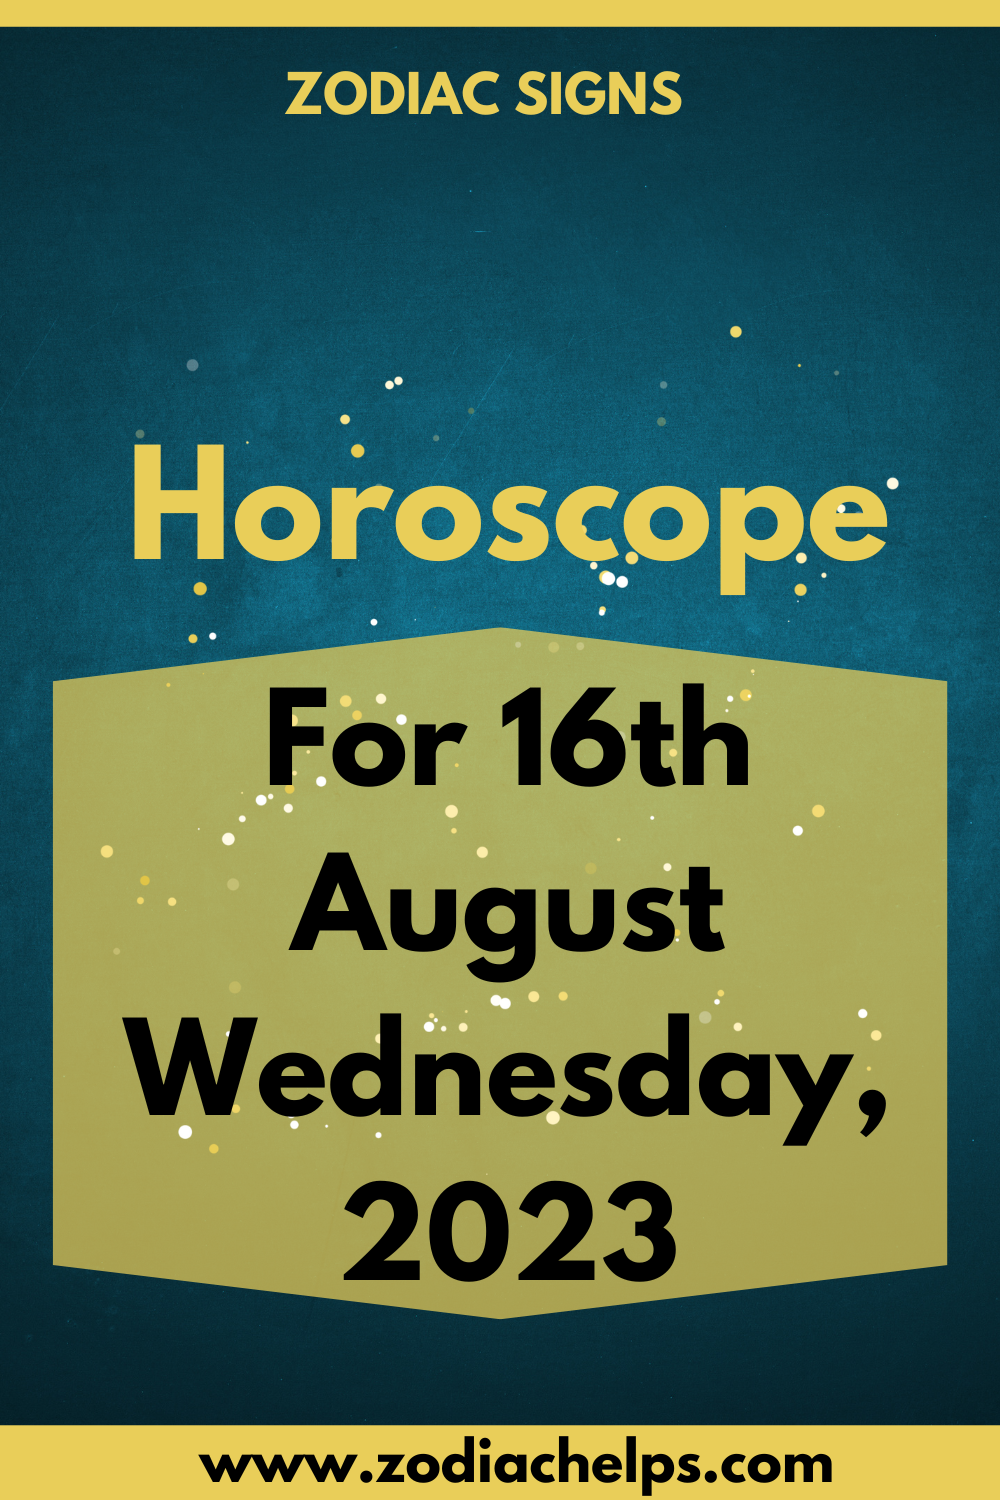 Horoscope for 16th August Wednesday, 2023